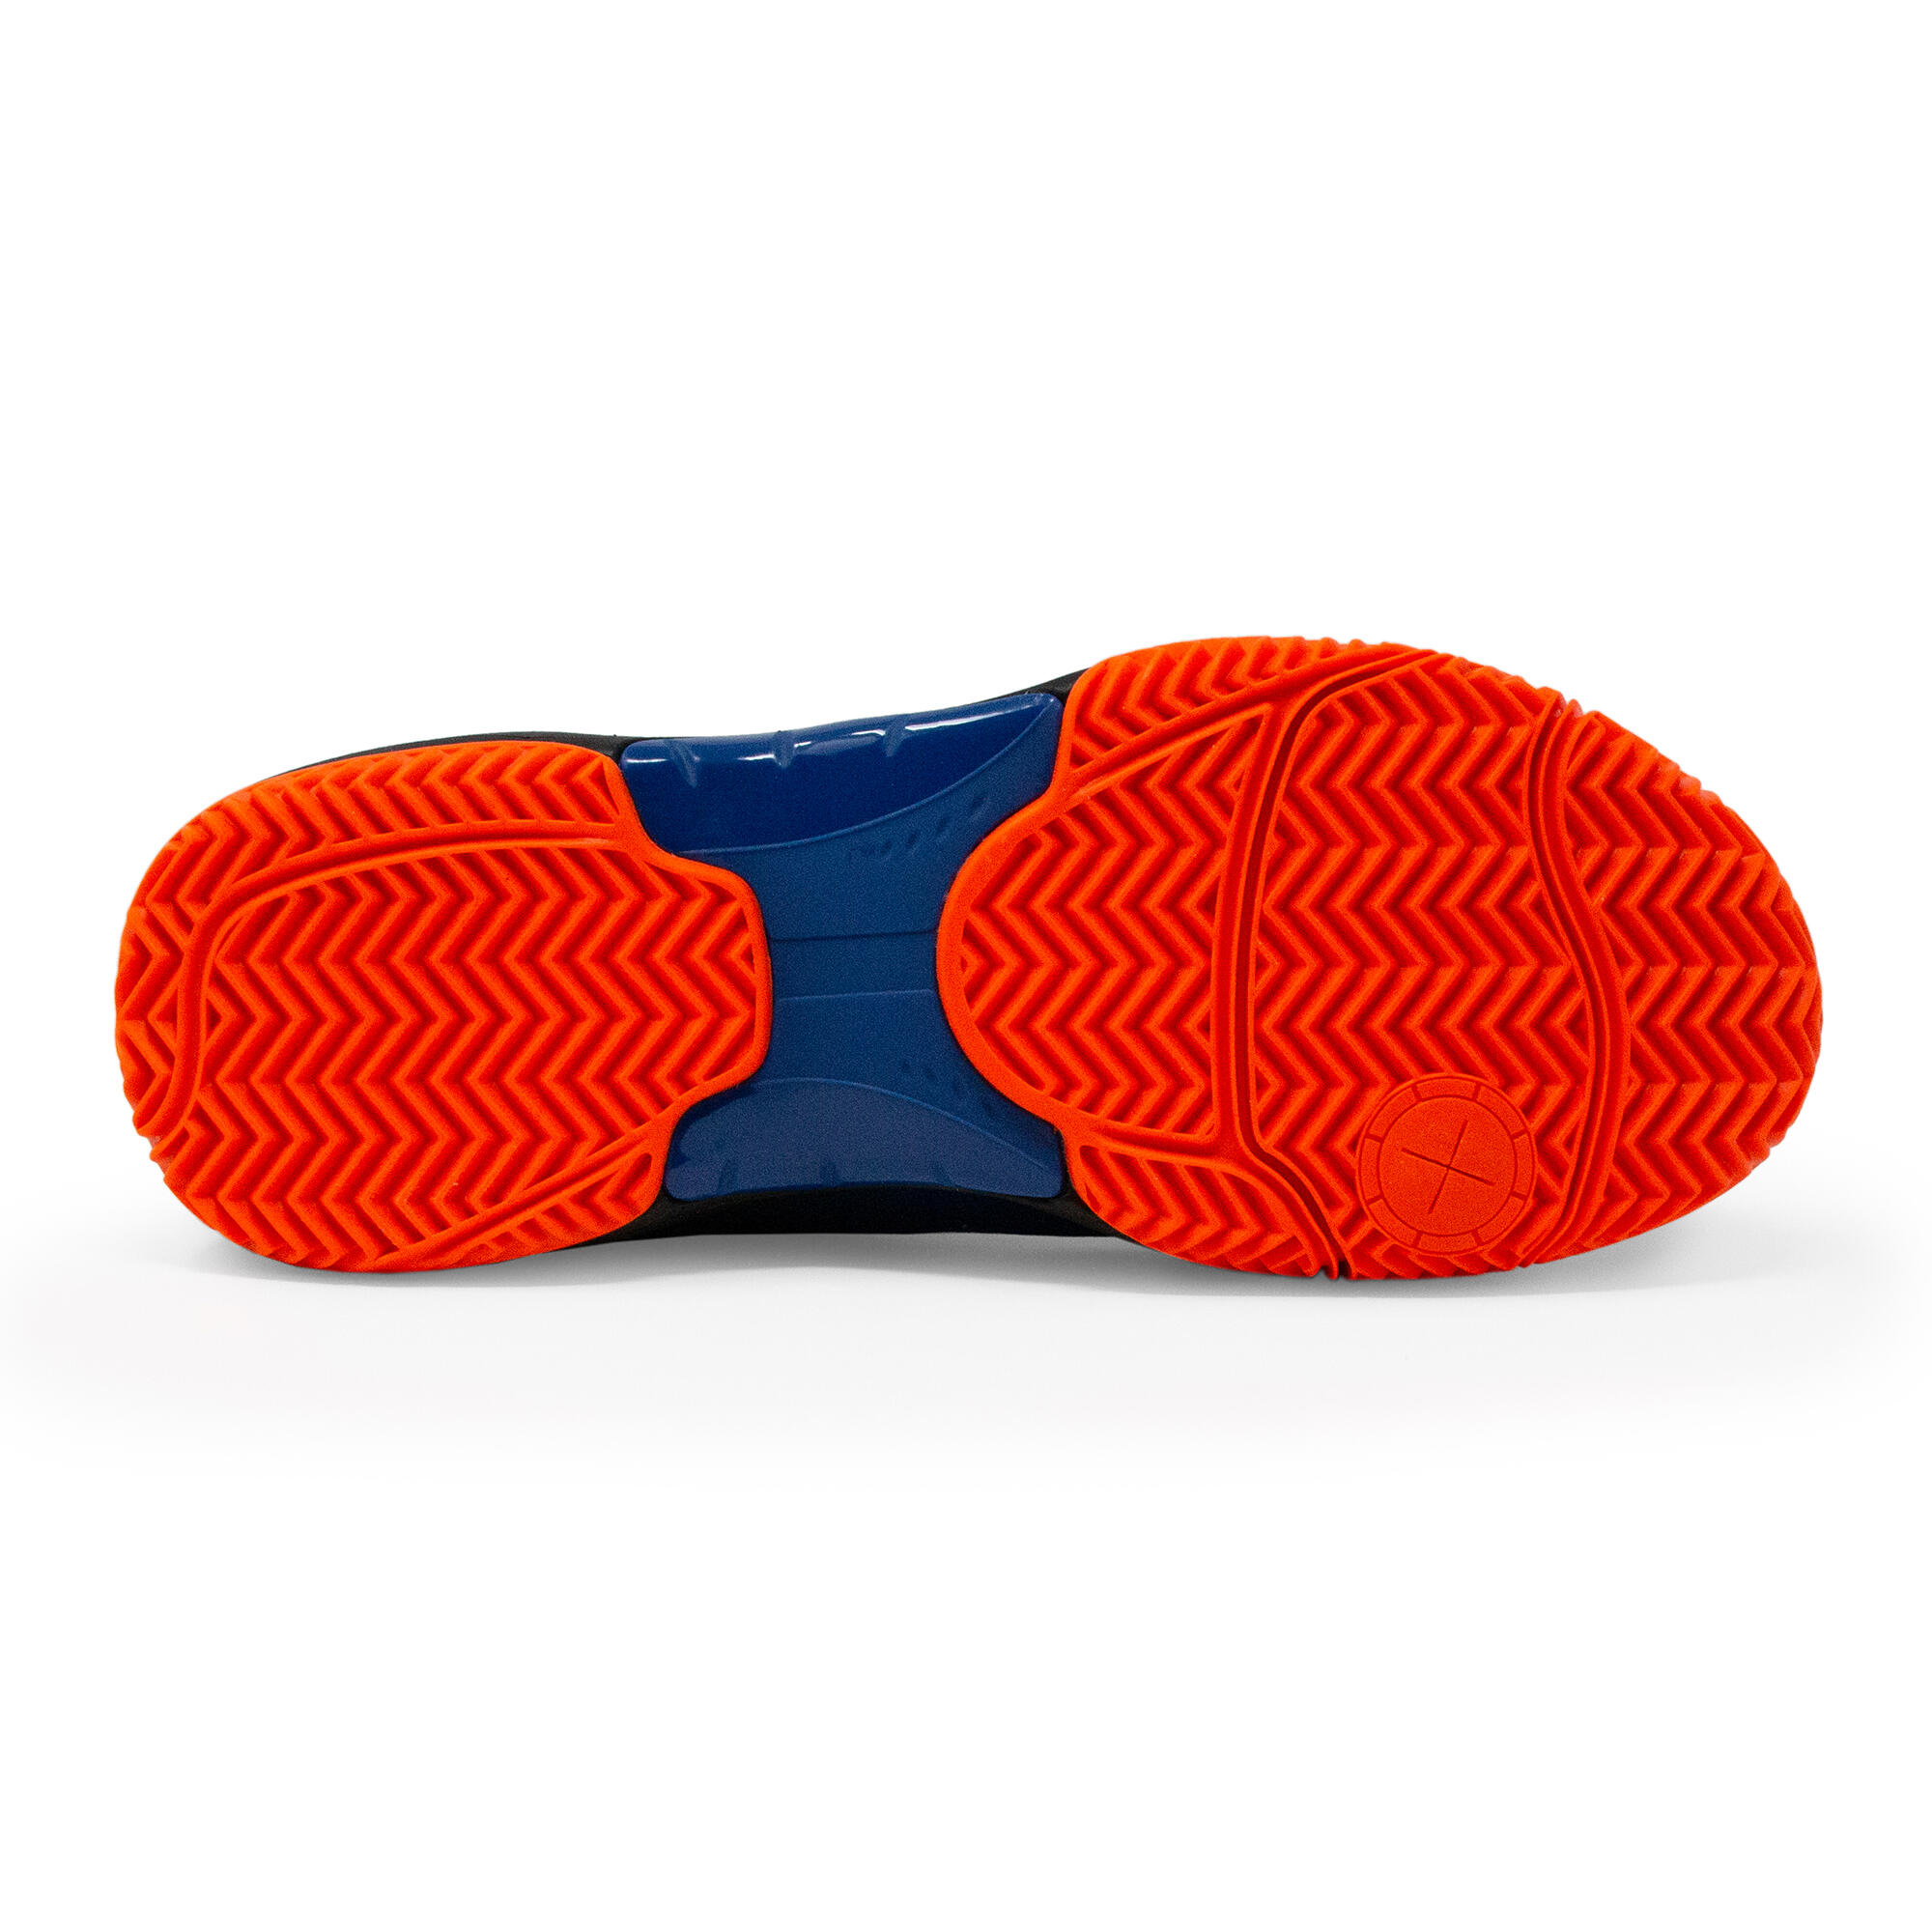 Men's Padel Shoes PS 990 Dynamic - Blue/Orange 11/16